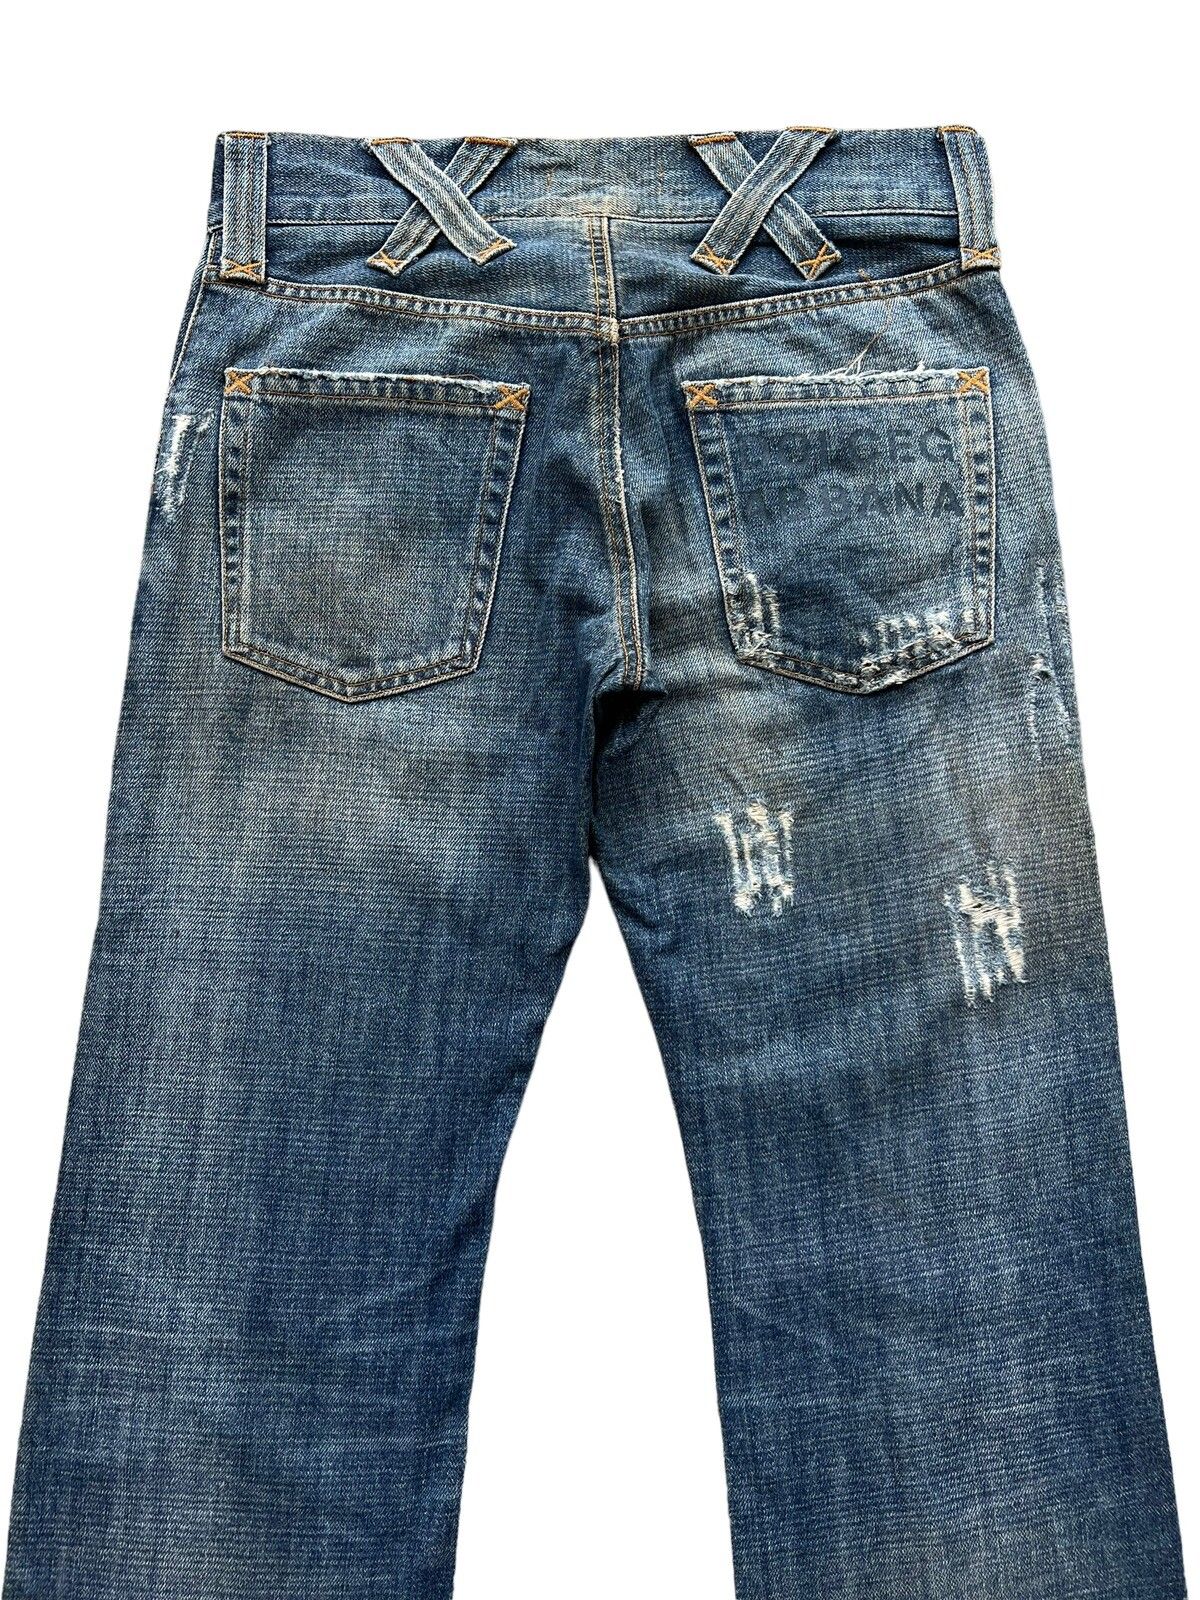 Dolce and Gabbana Crash Distressed Denim Jeans 31x32.5 - 6